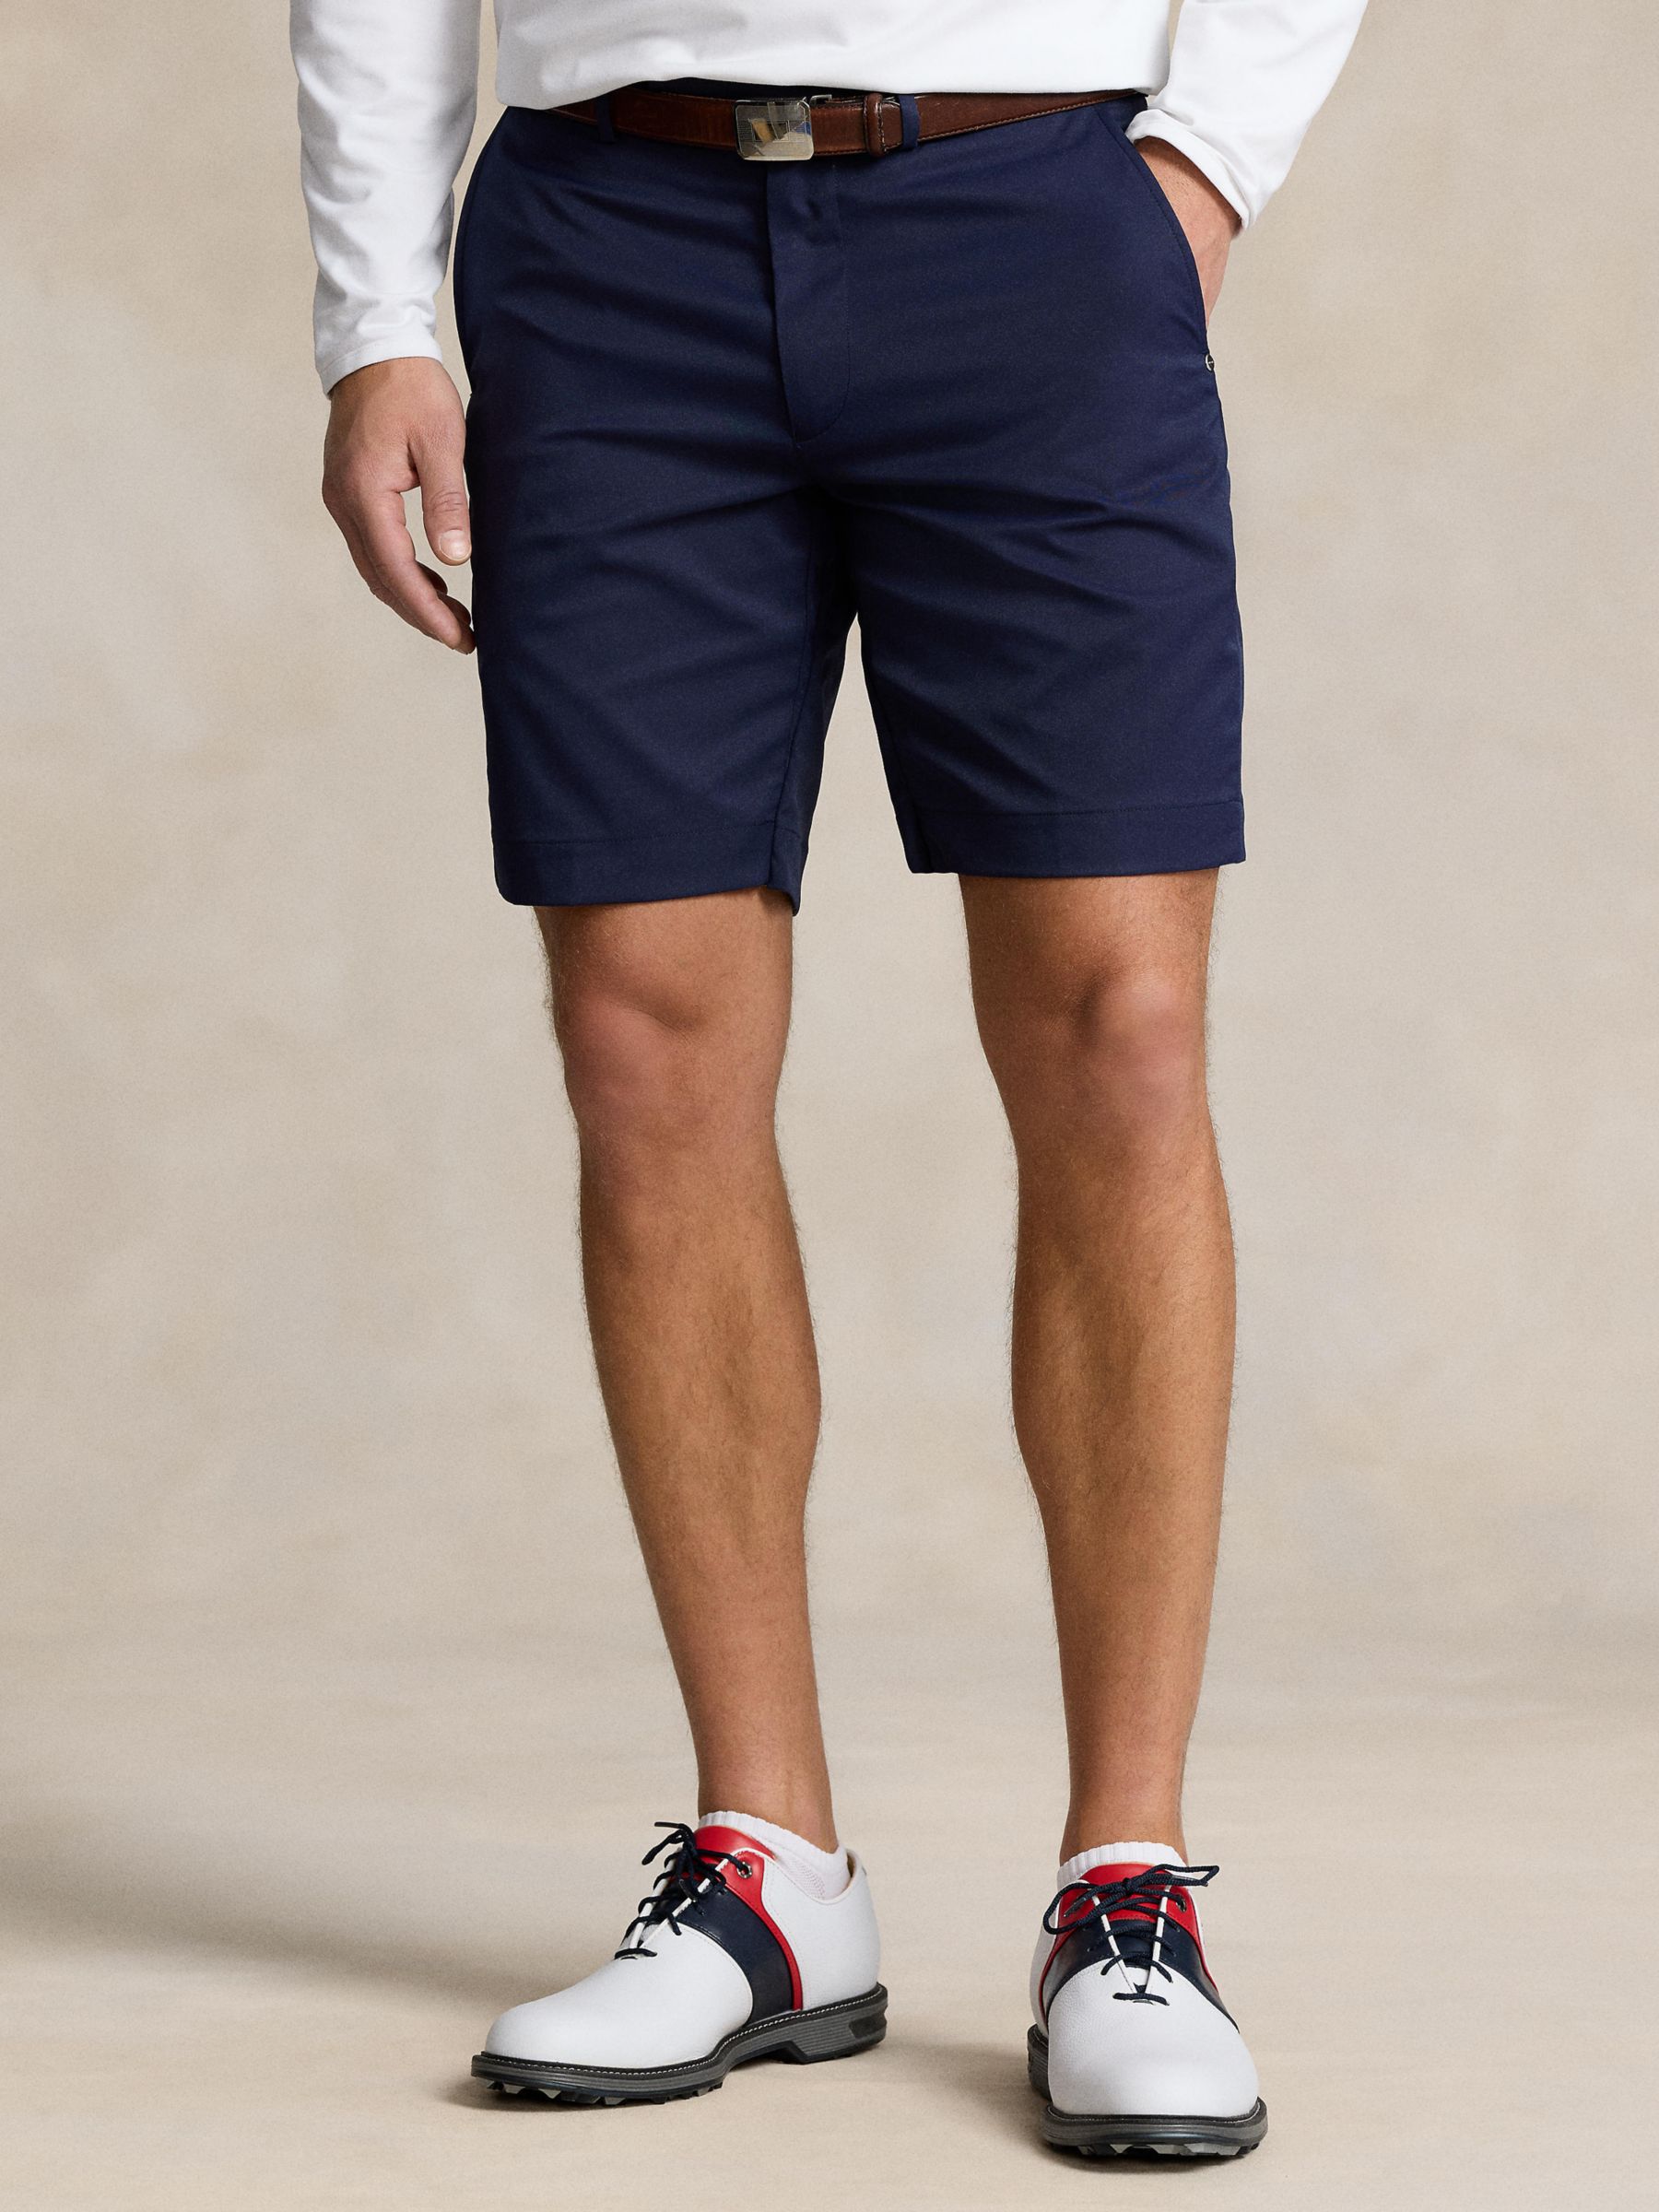 Ralph Lauren 9-Inch Tailored Fit Shorts, Navy, 30R